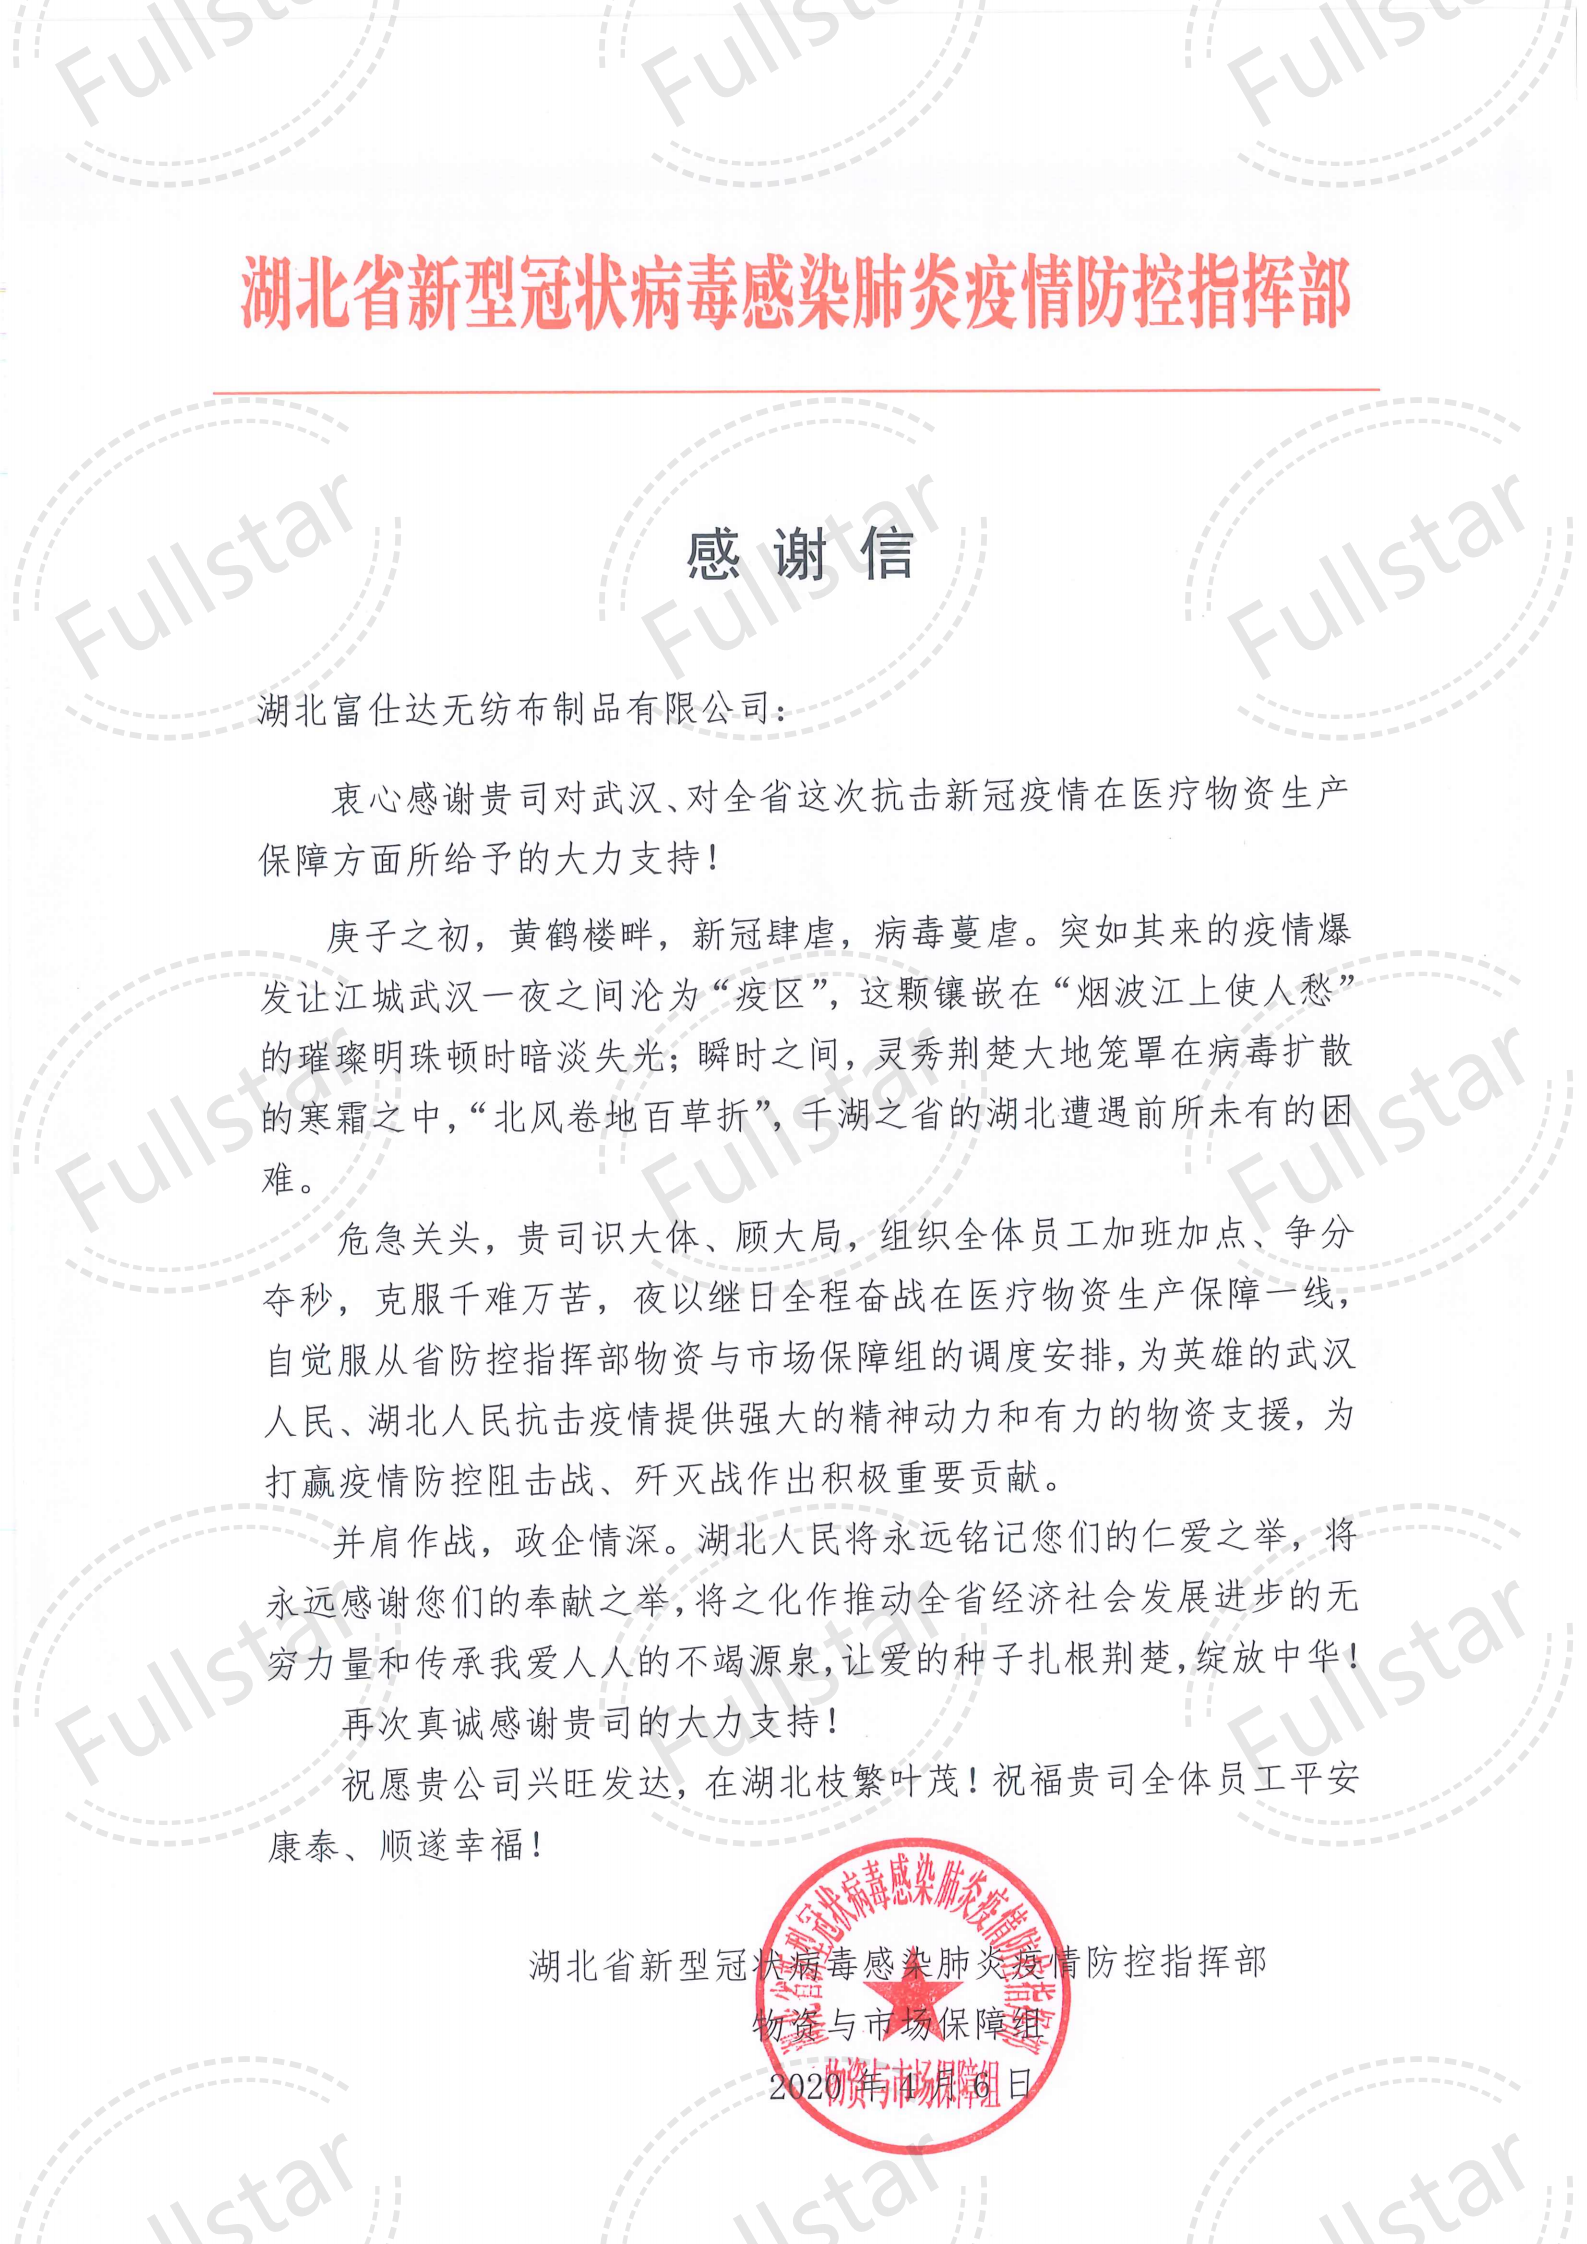 (Hubei Fushida Nonwovens Company) رسالة شكر من قيادة الوقاية والسيطرة بمقاطعة هوبى _00 (1) .png